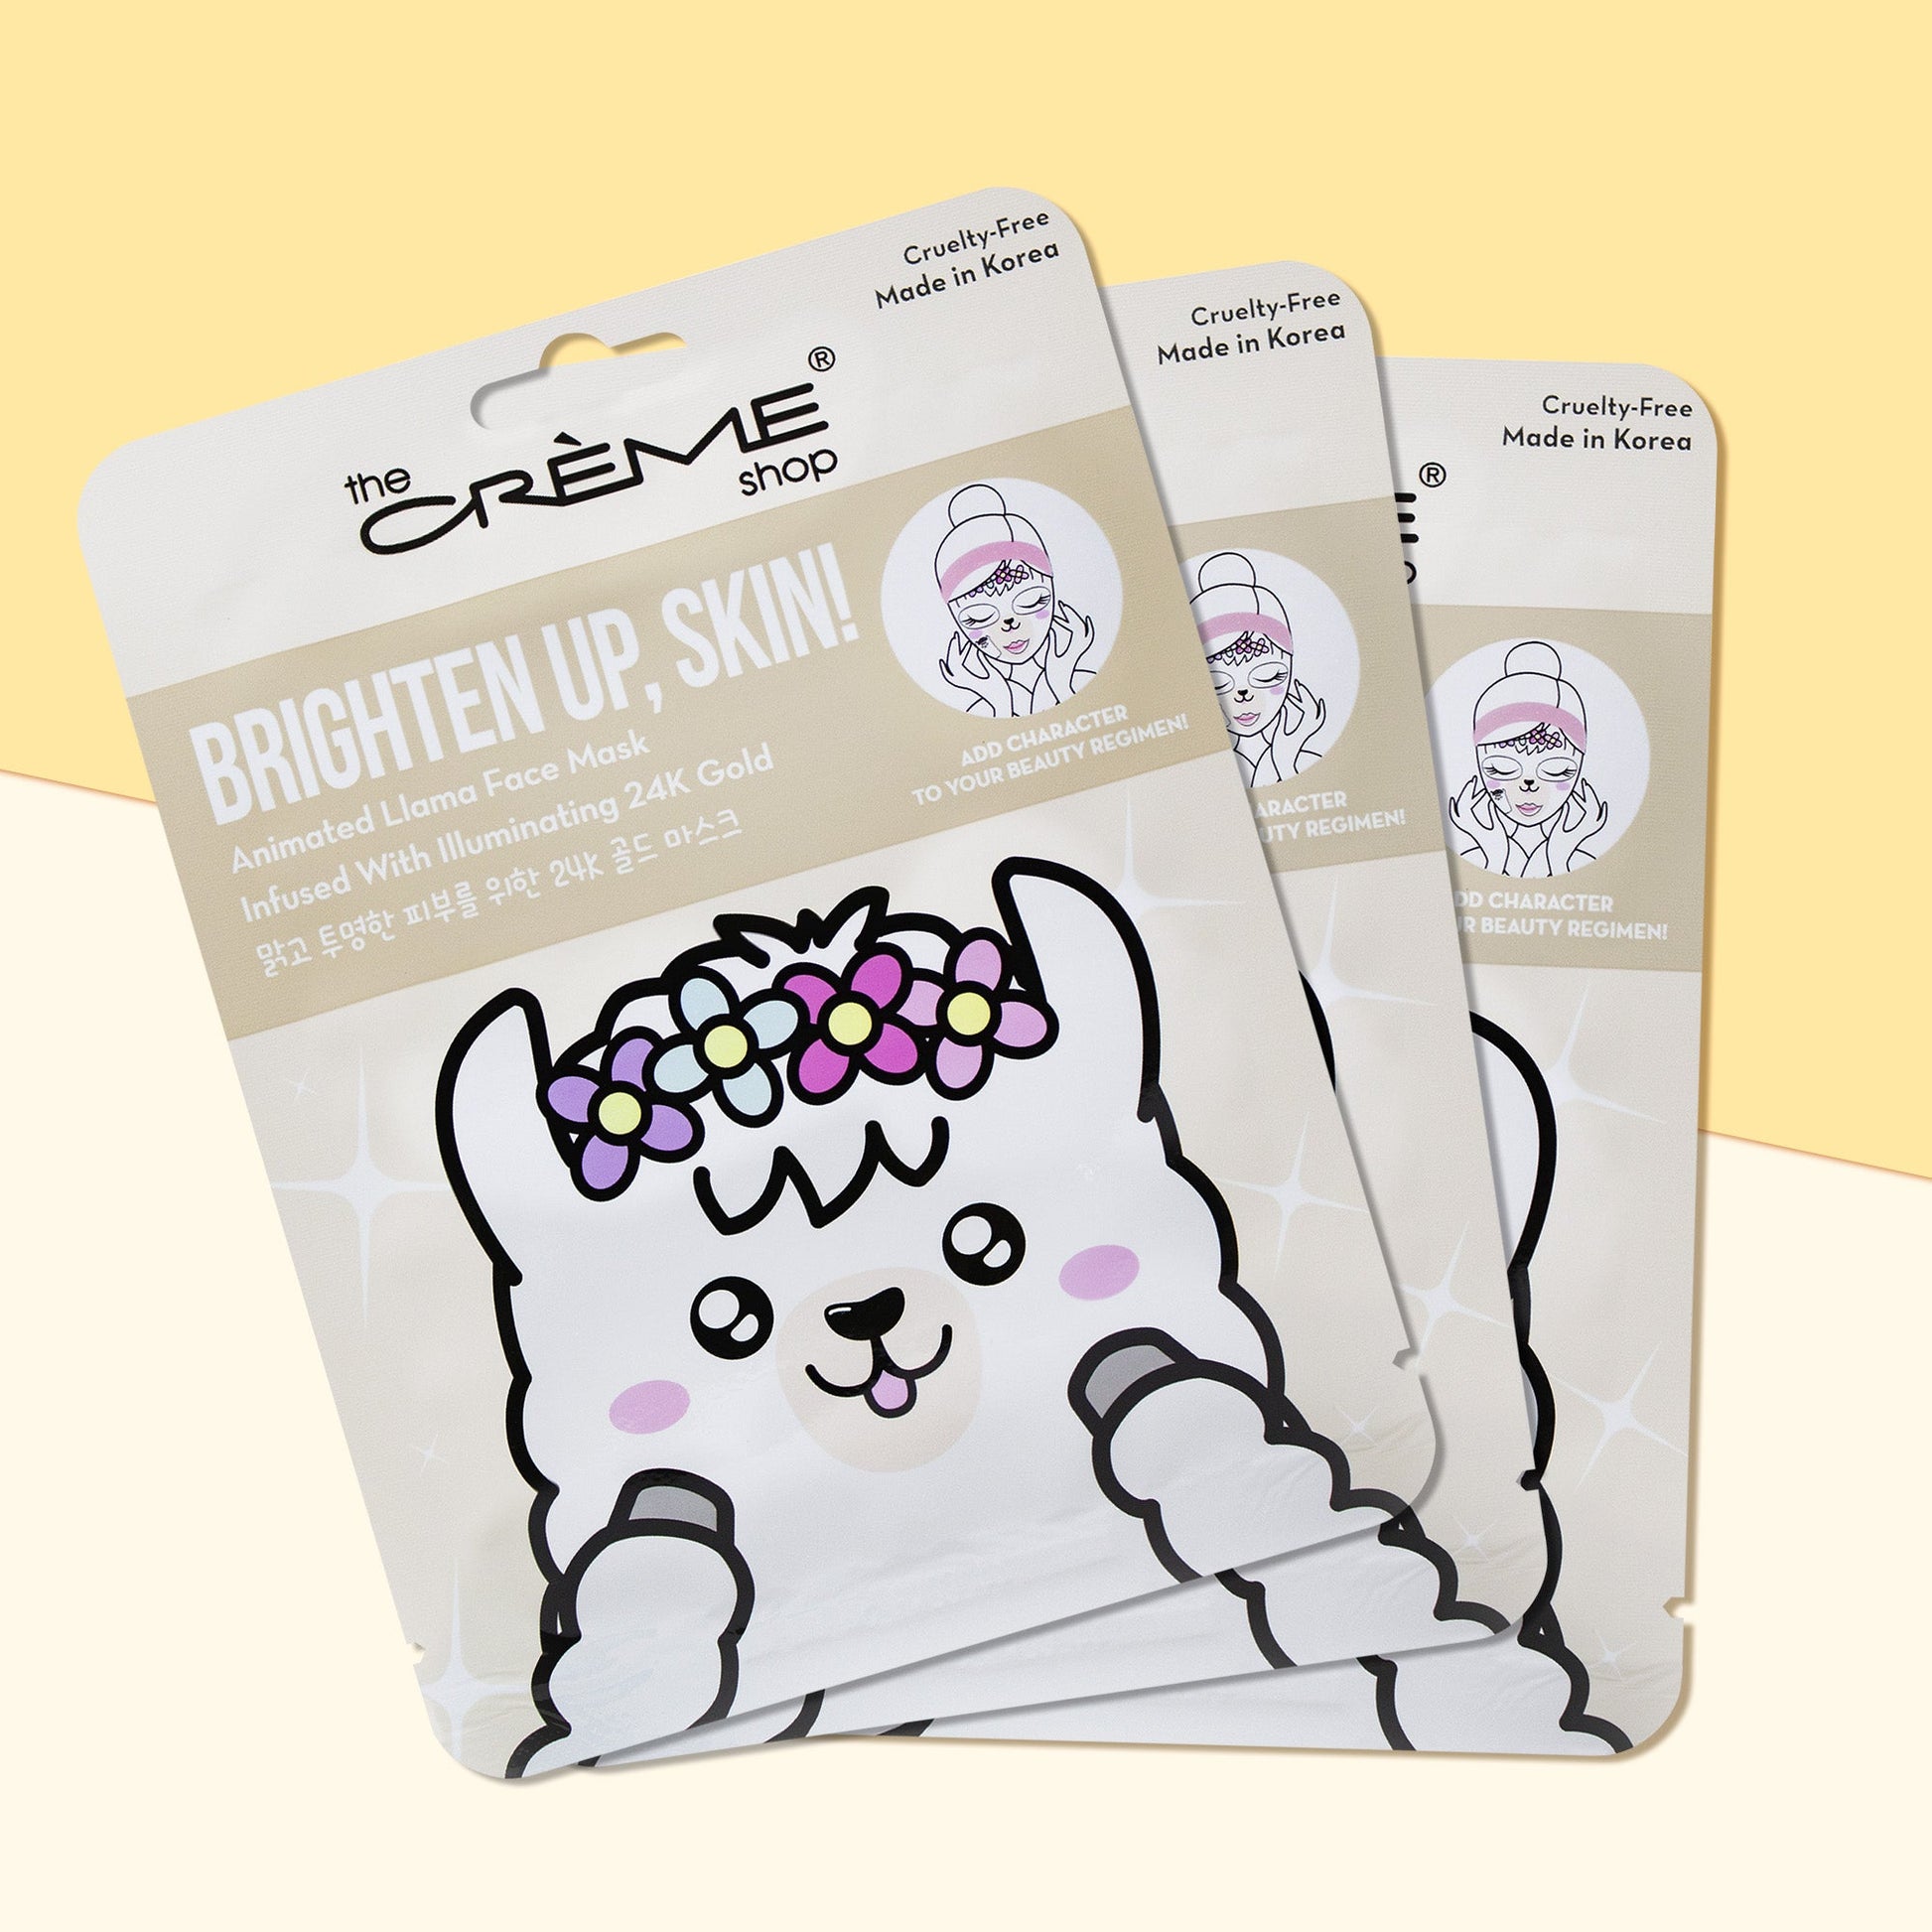 Brighten Up, Skin! Animated Llama Face Mask Animated Sheet Masks - The Crème Shop 